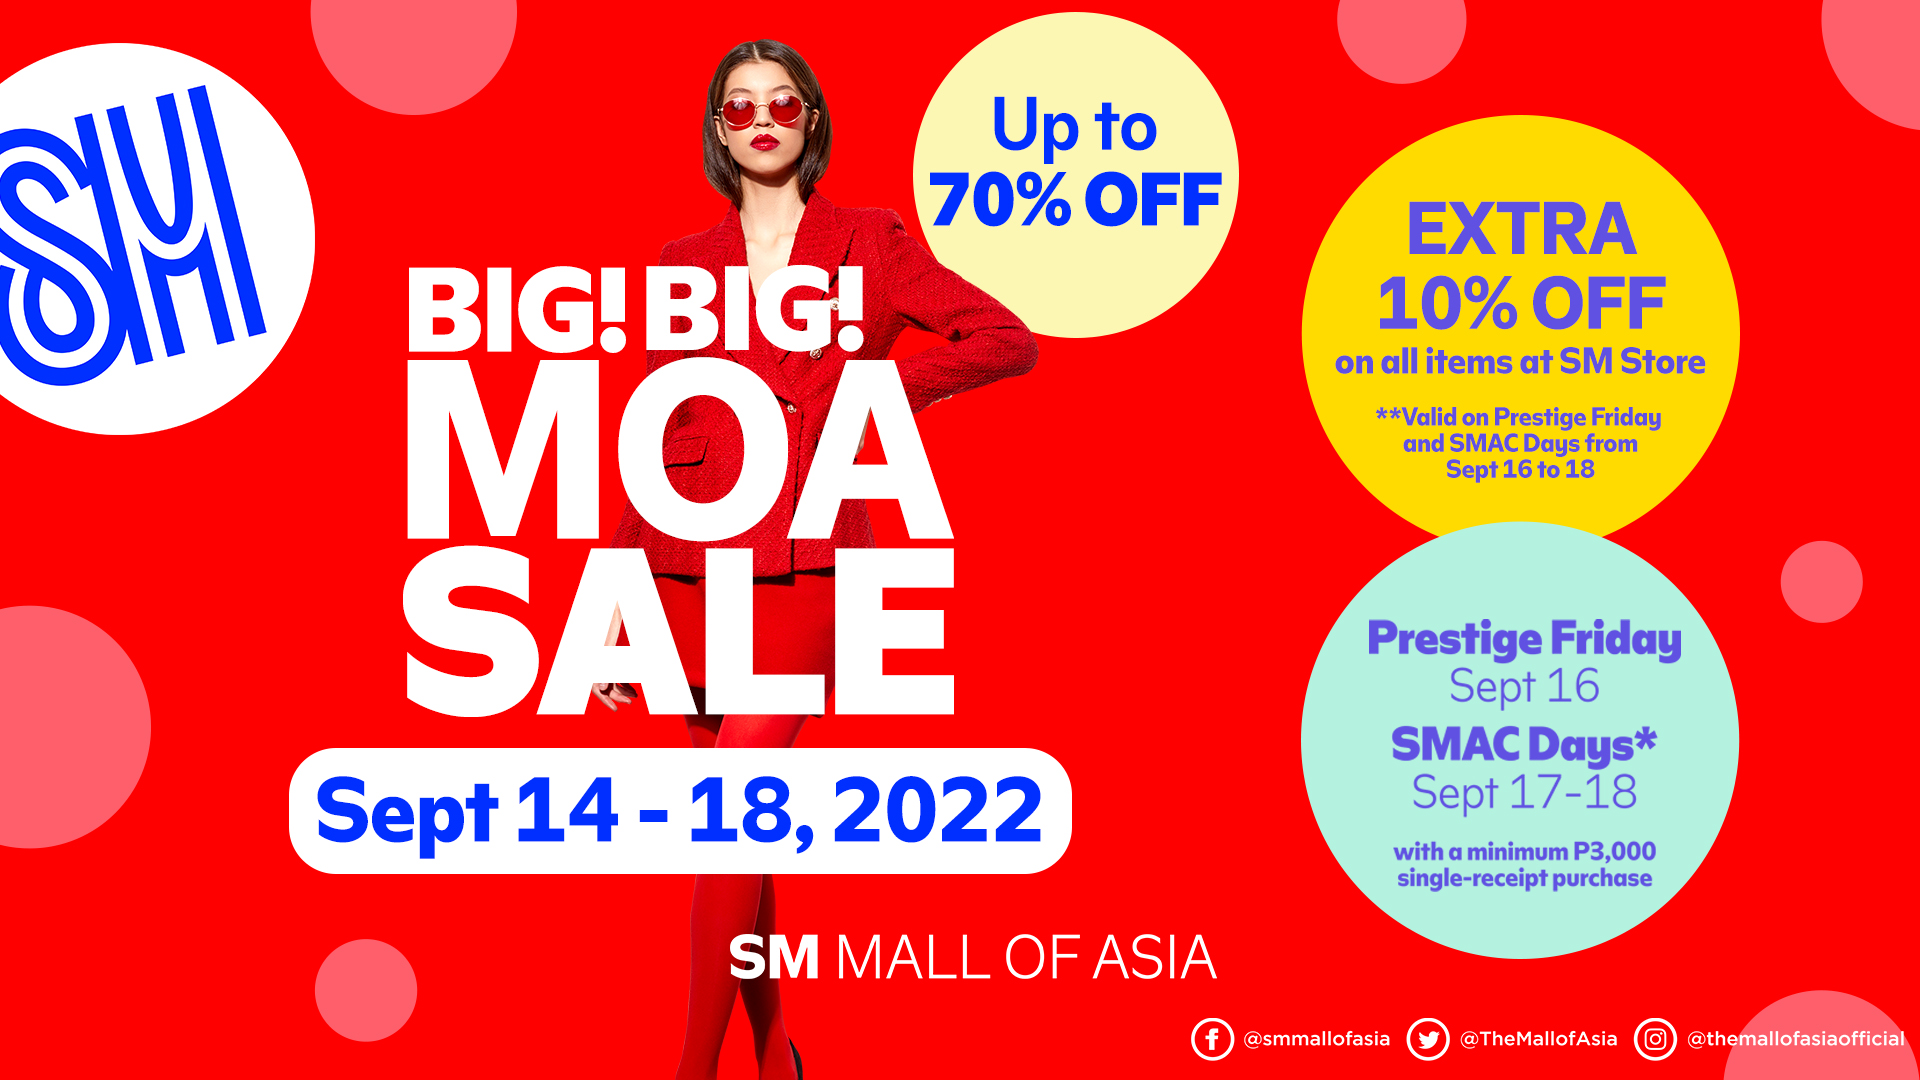 Manila Shopper The Big! BIG! SM MOA SALE